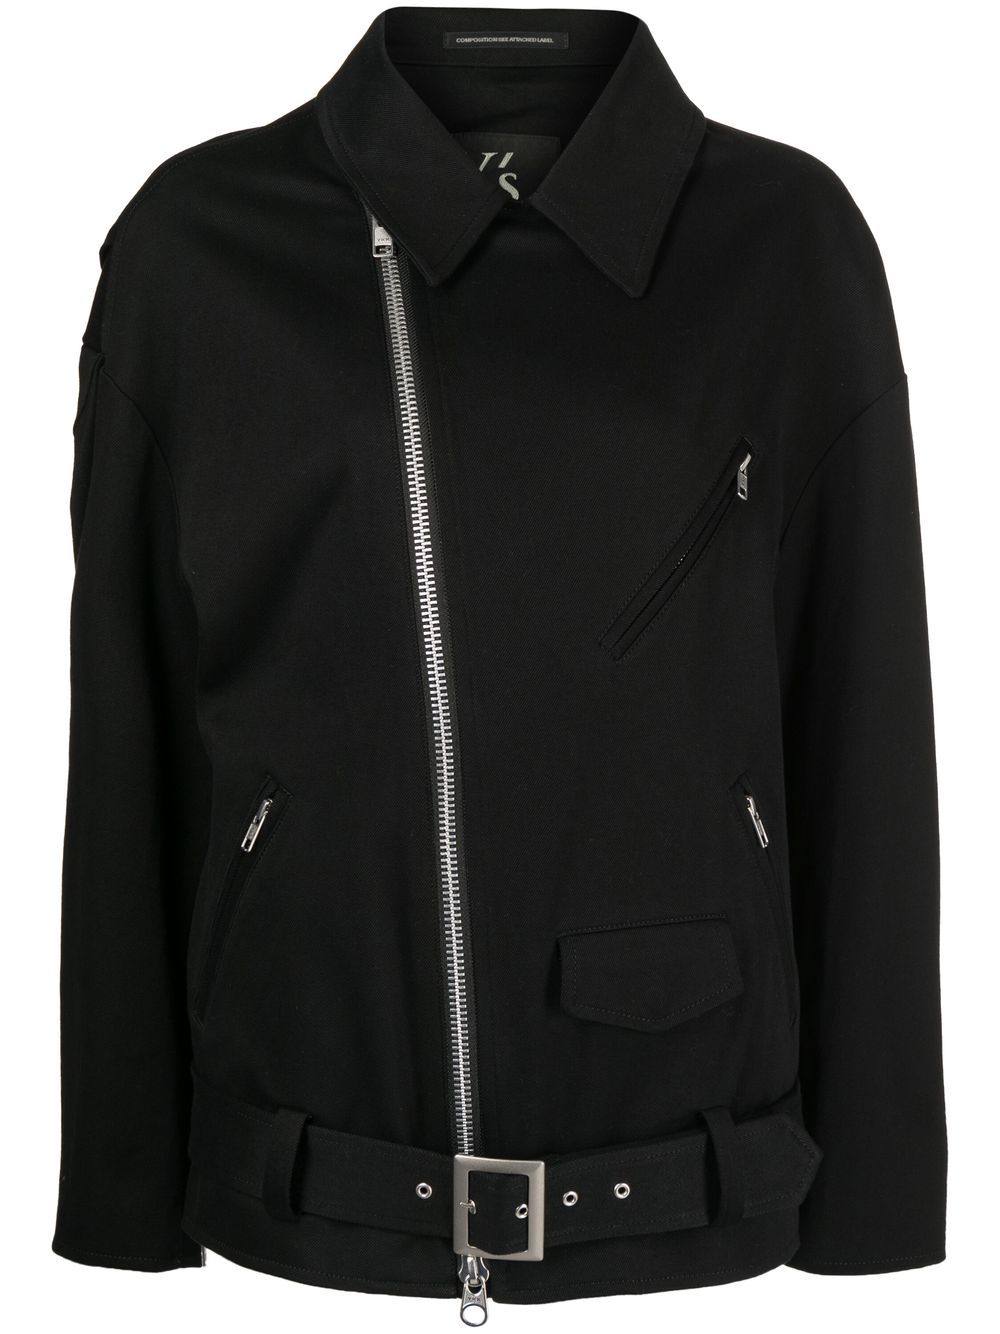 zipped-pockets zip-up jacket